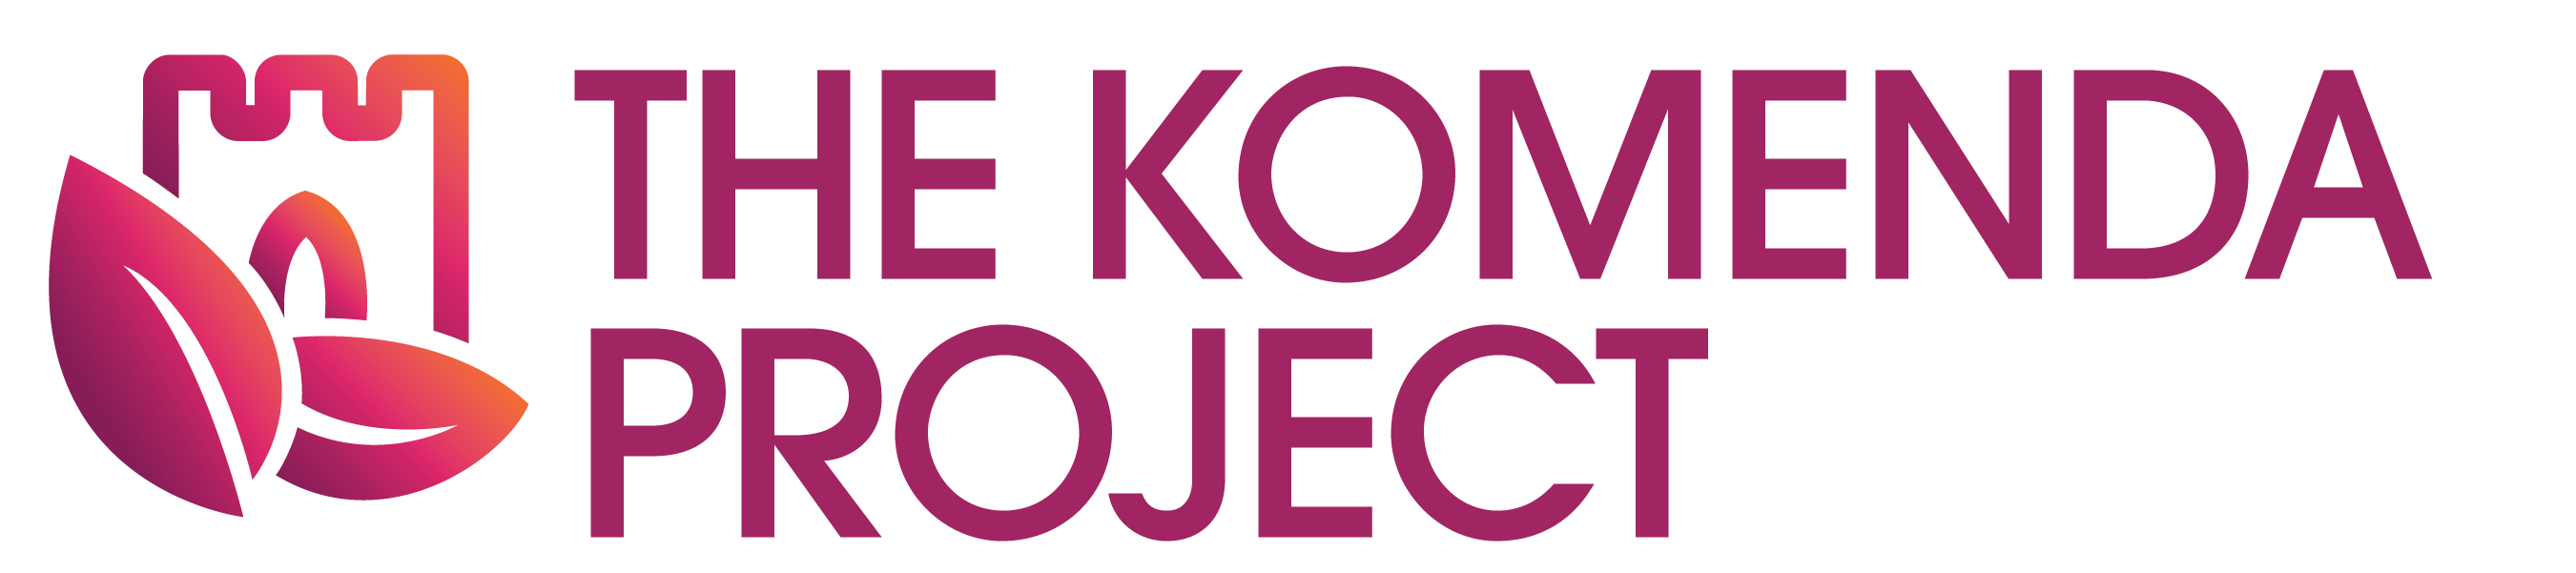 The Komenda Project logo